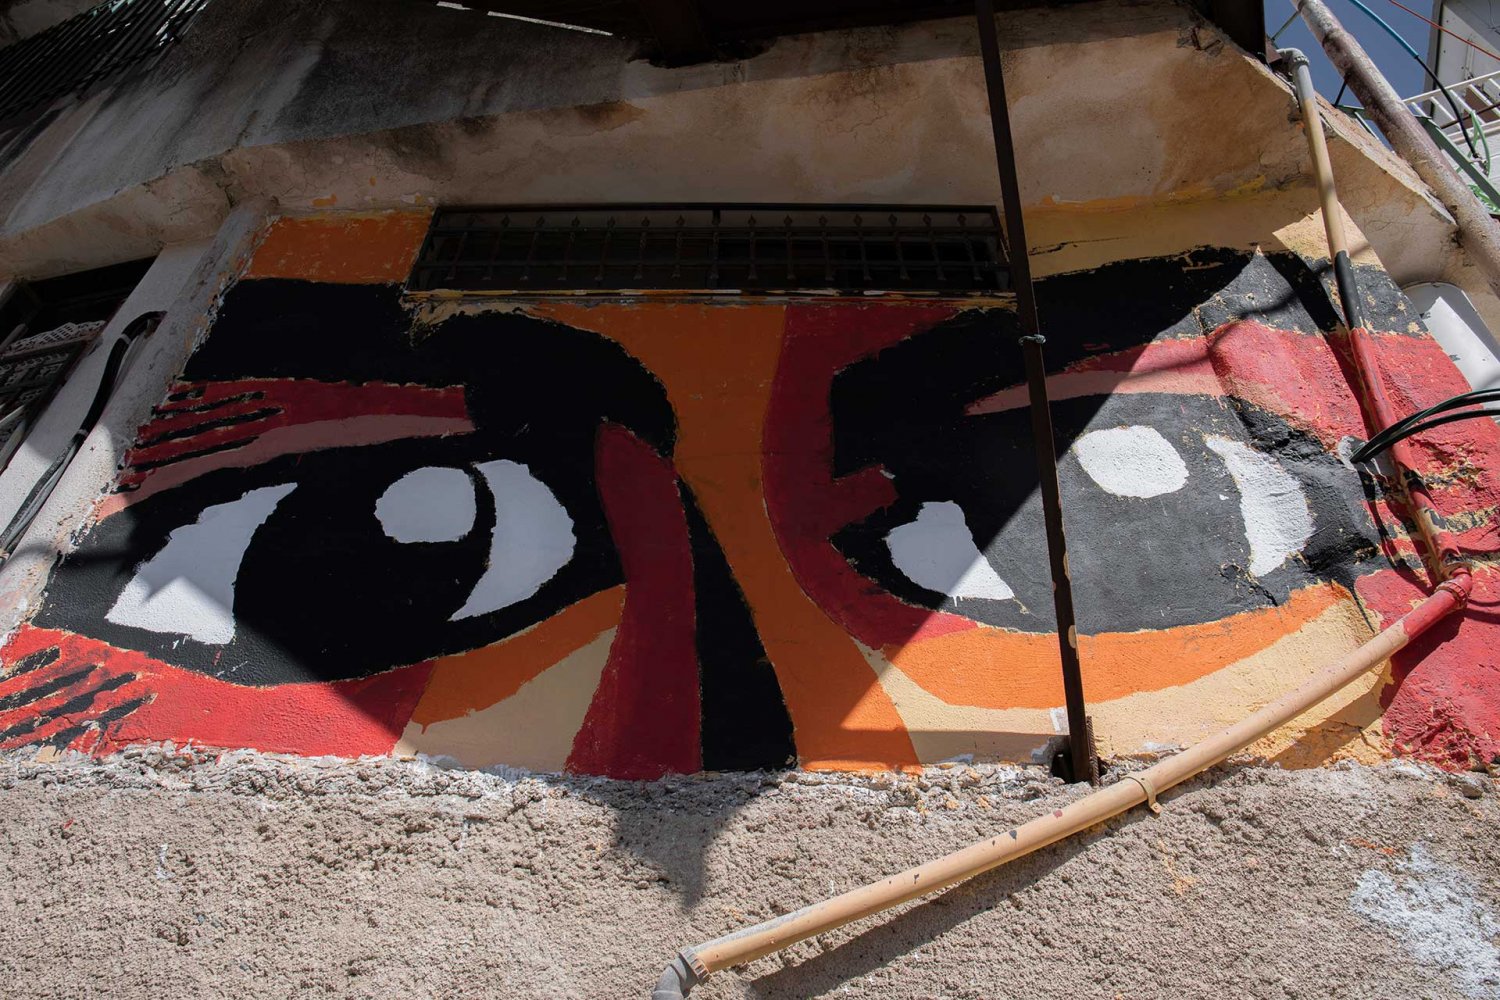 Grafitti eyes painted on a wall in Silwan, Jerusalem, as part of an art installation 